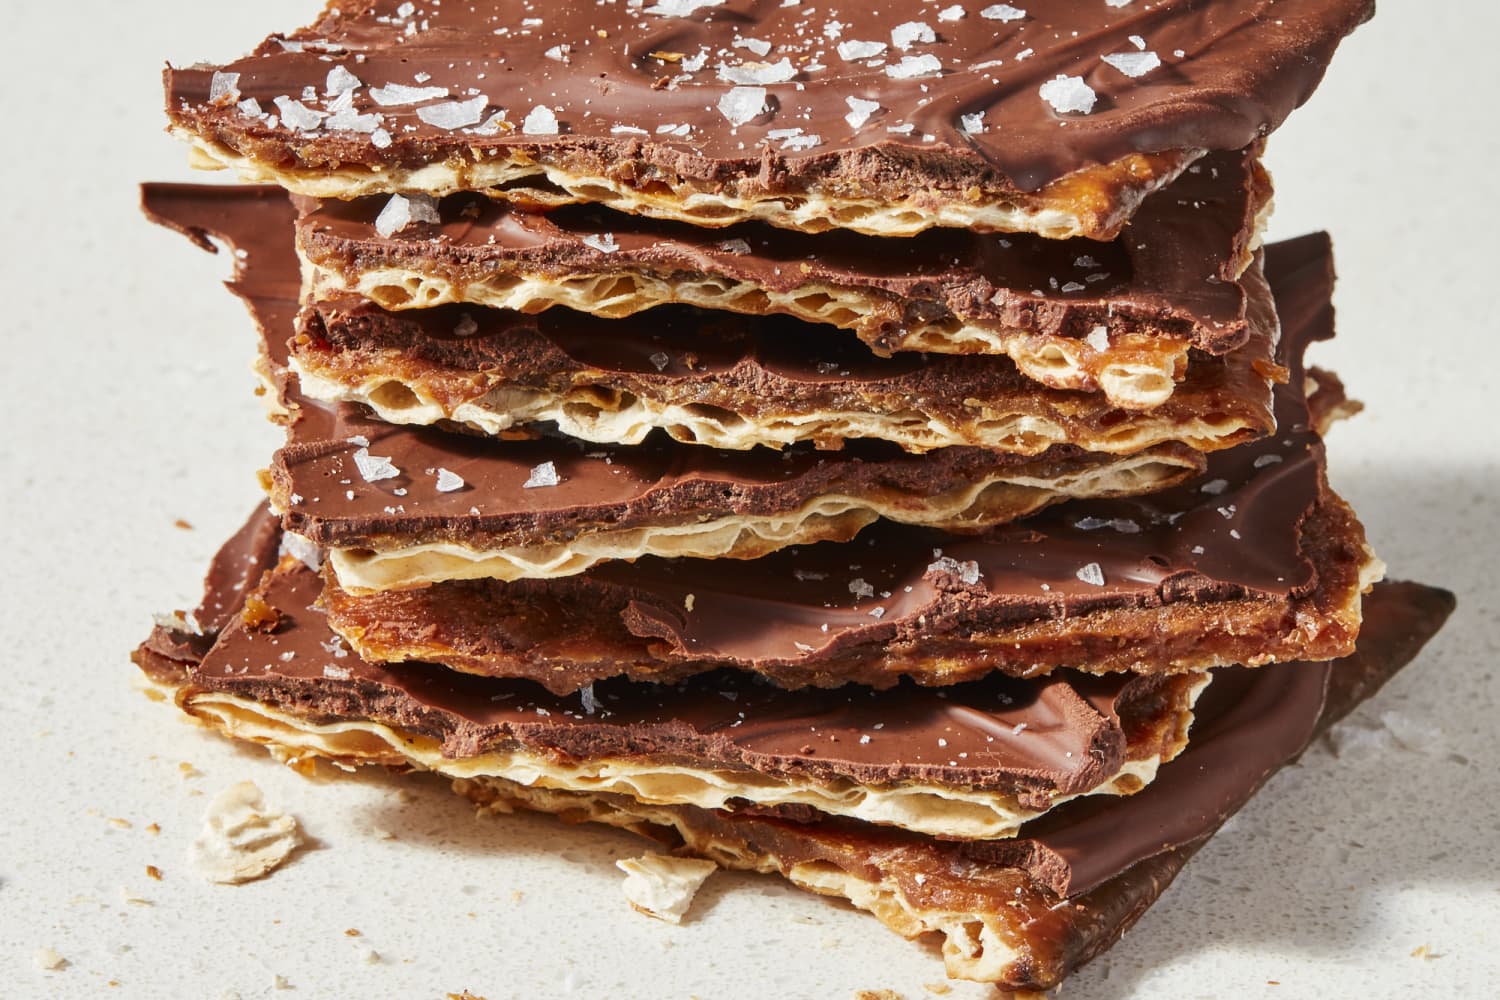 Chocolate-Covered Matzo Recipe: How to Make It